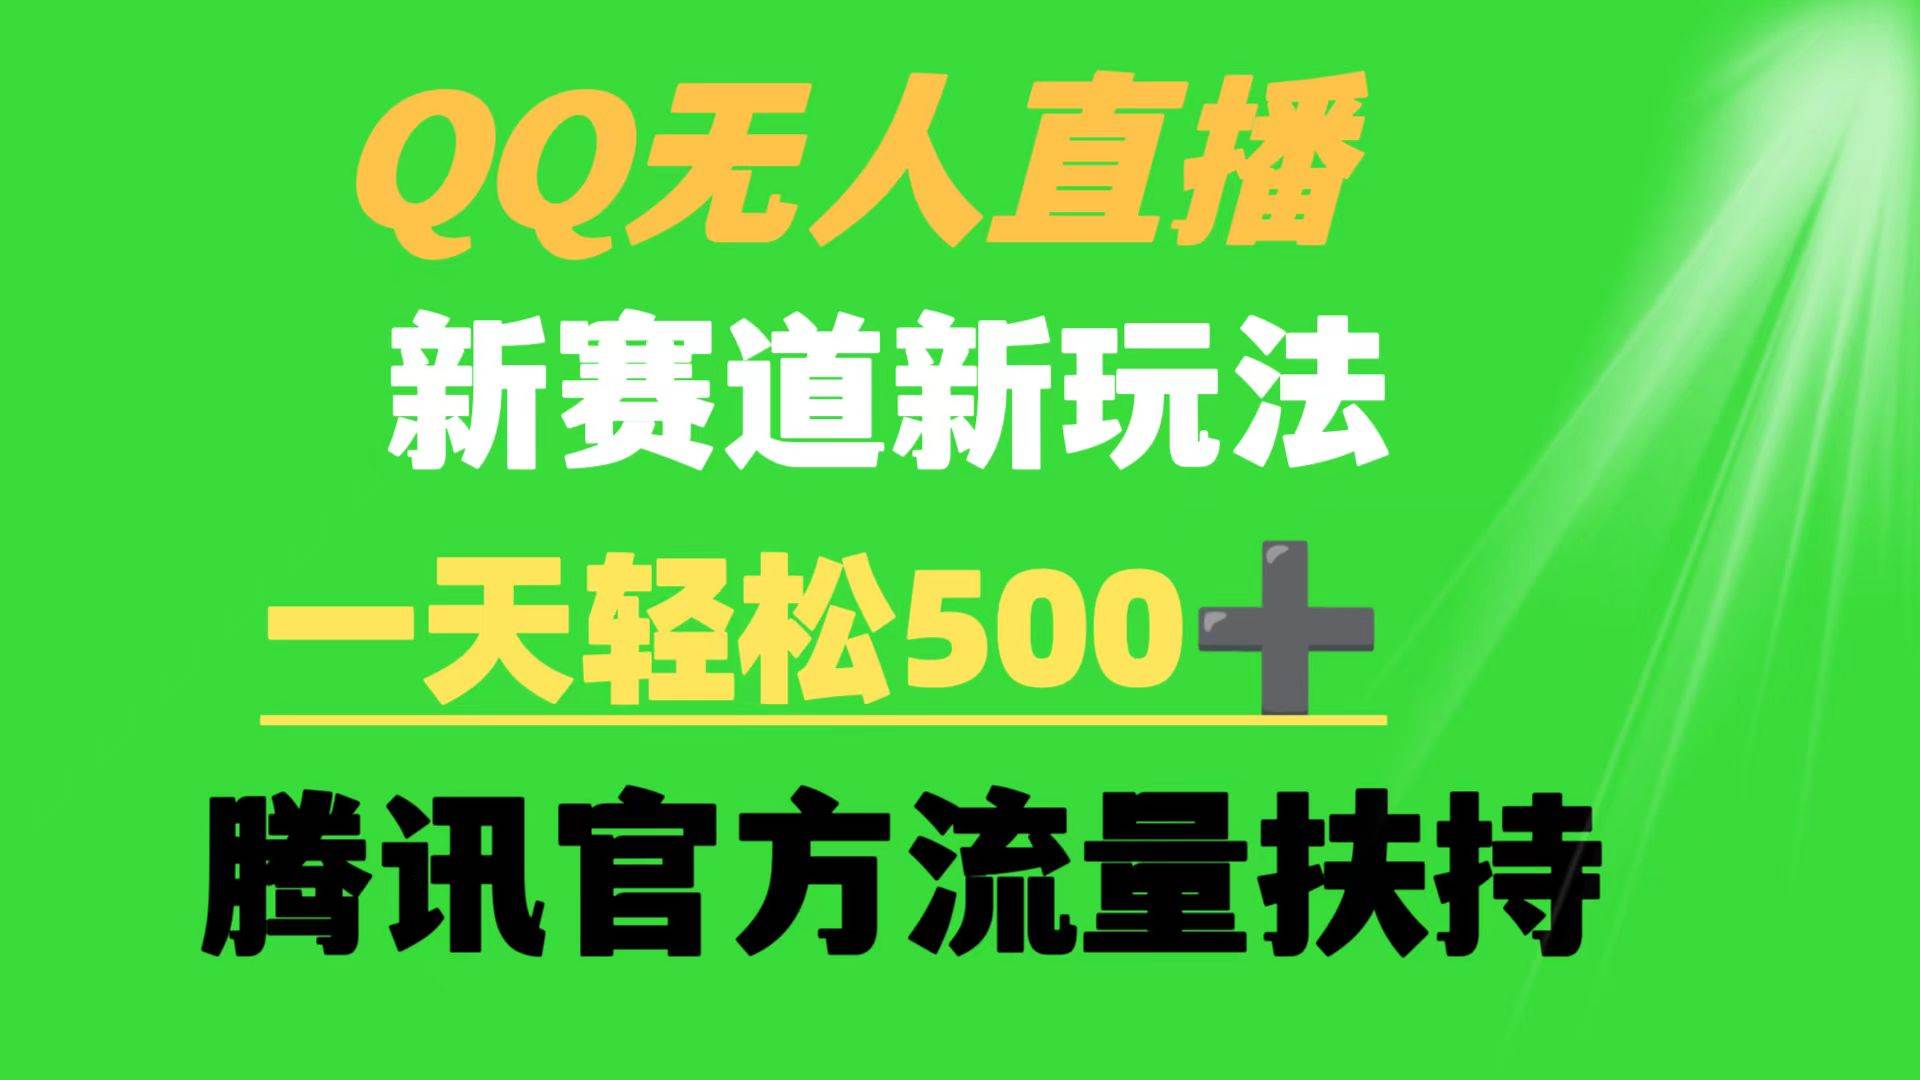 QQ无人直播 新赛道新玩法 一天轻松500+ 腾讯官方流量扶持-梧桐生花